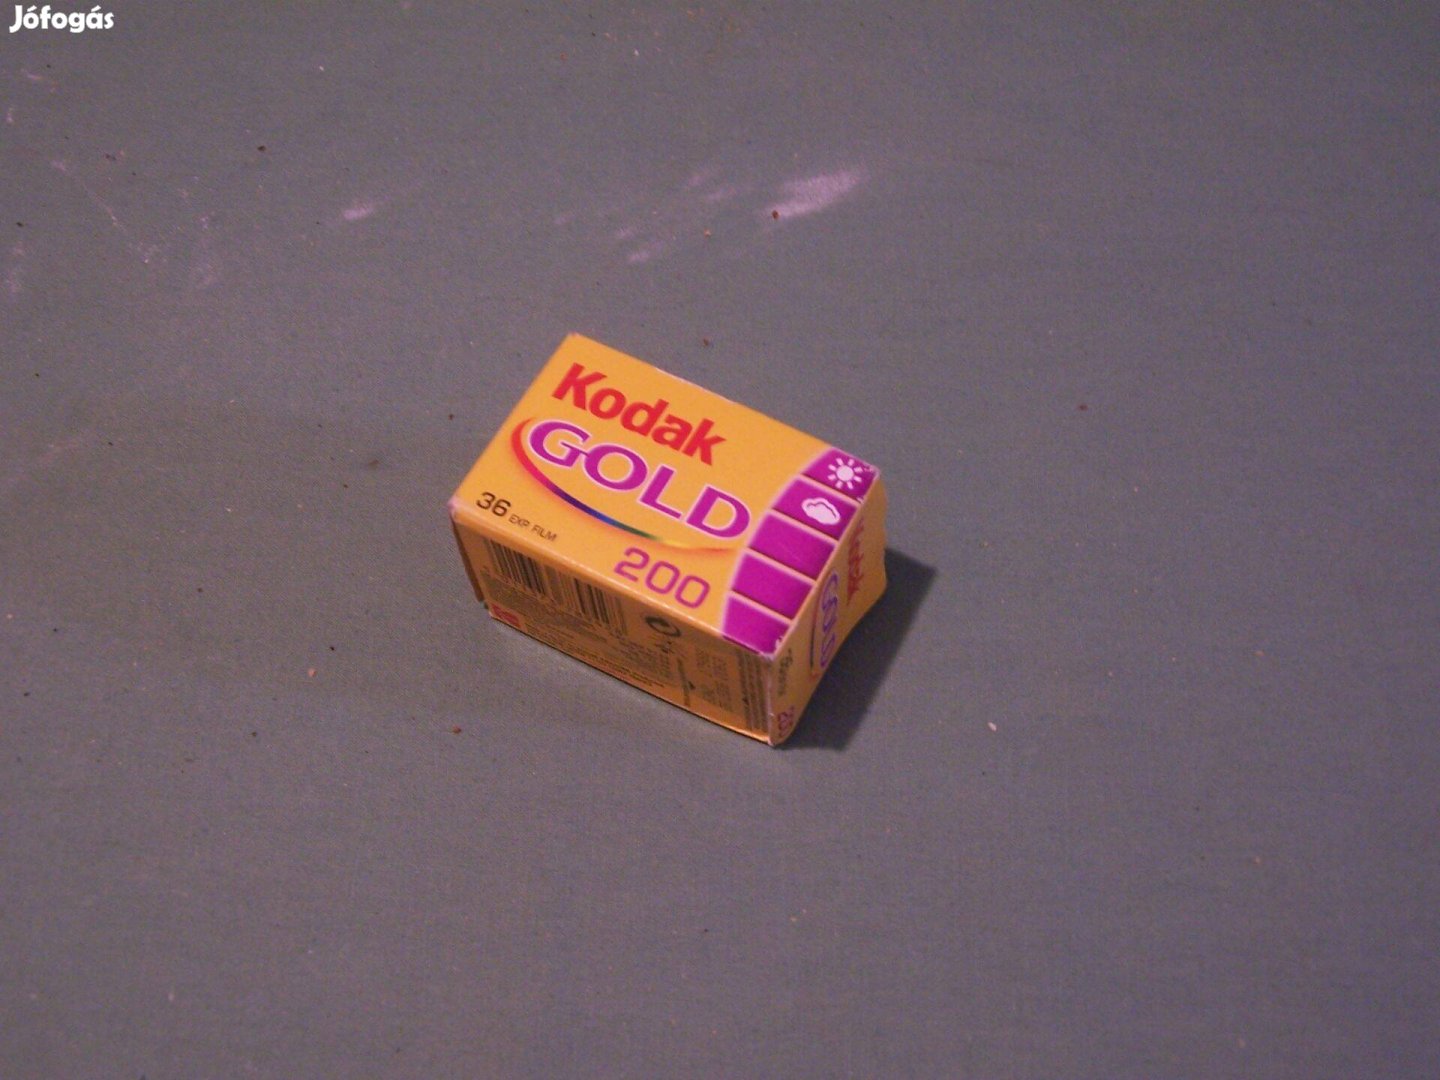 Kodak Gold 200 film